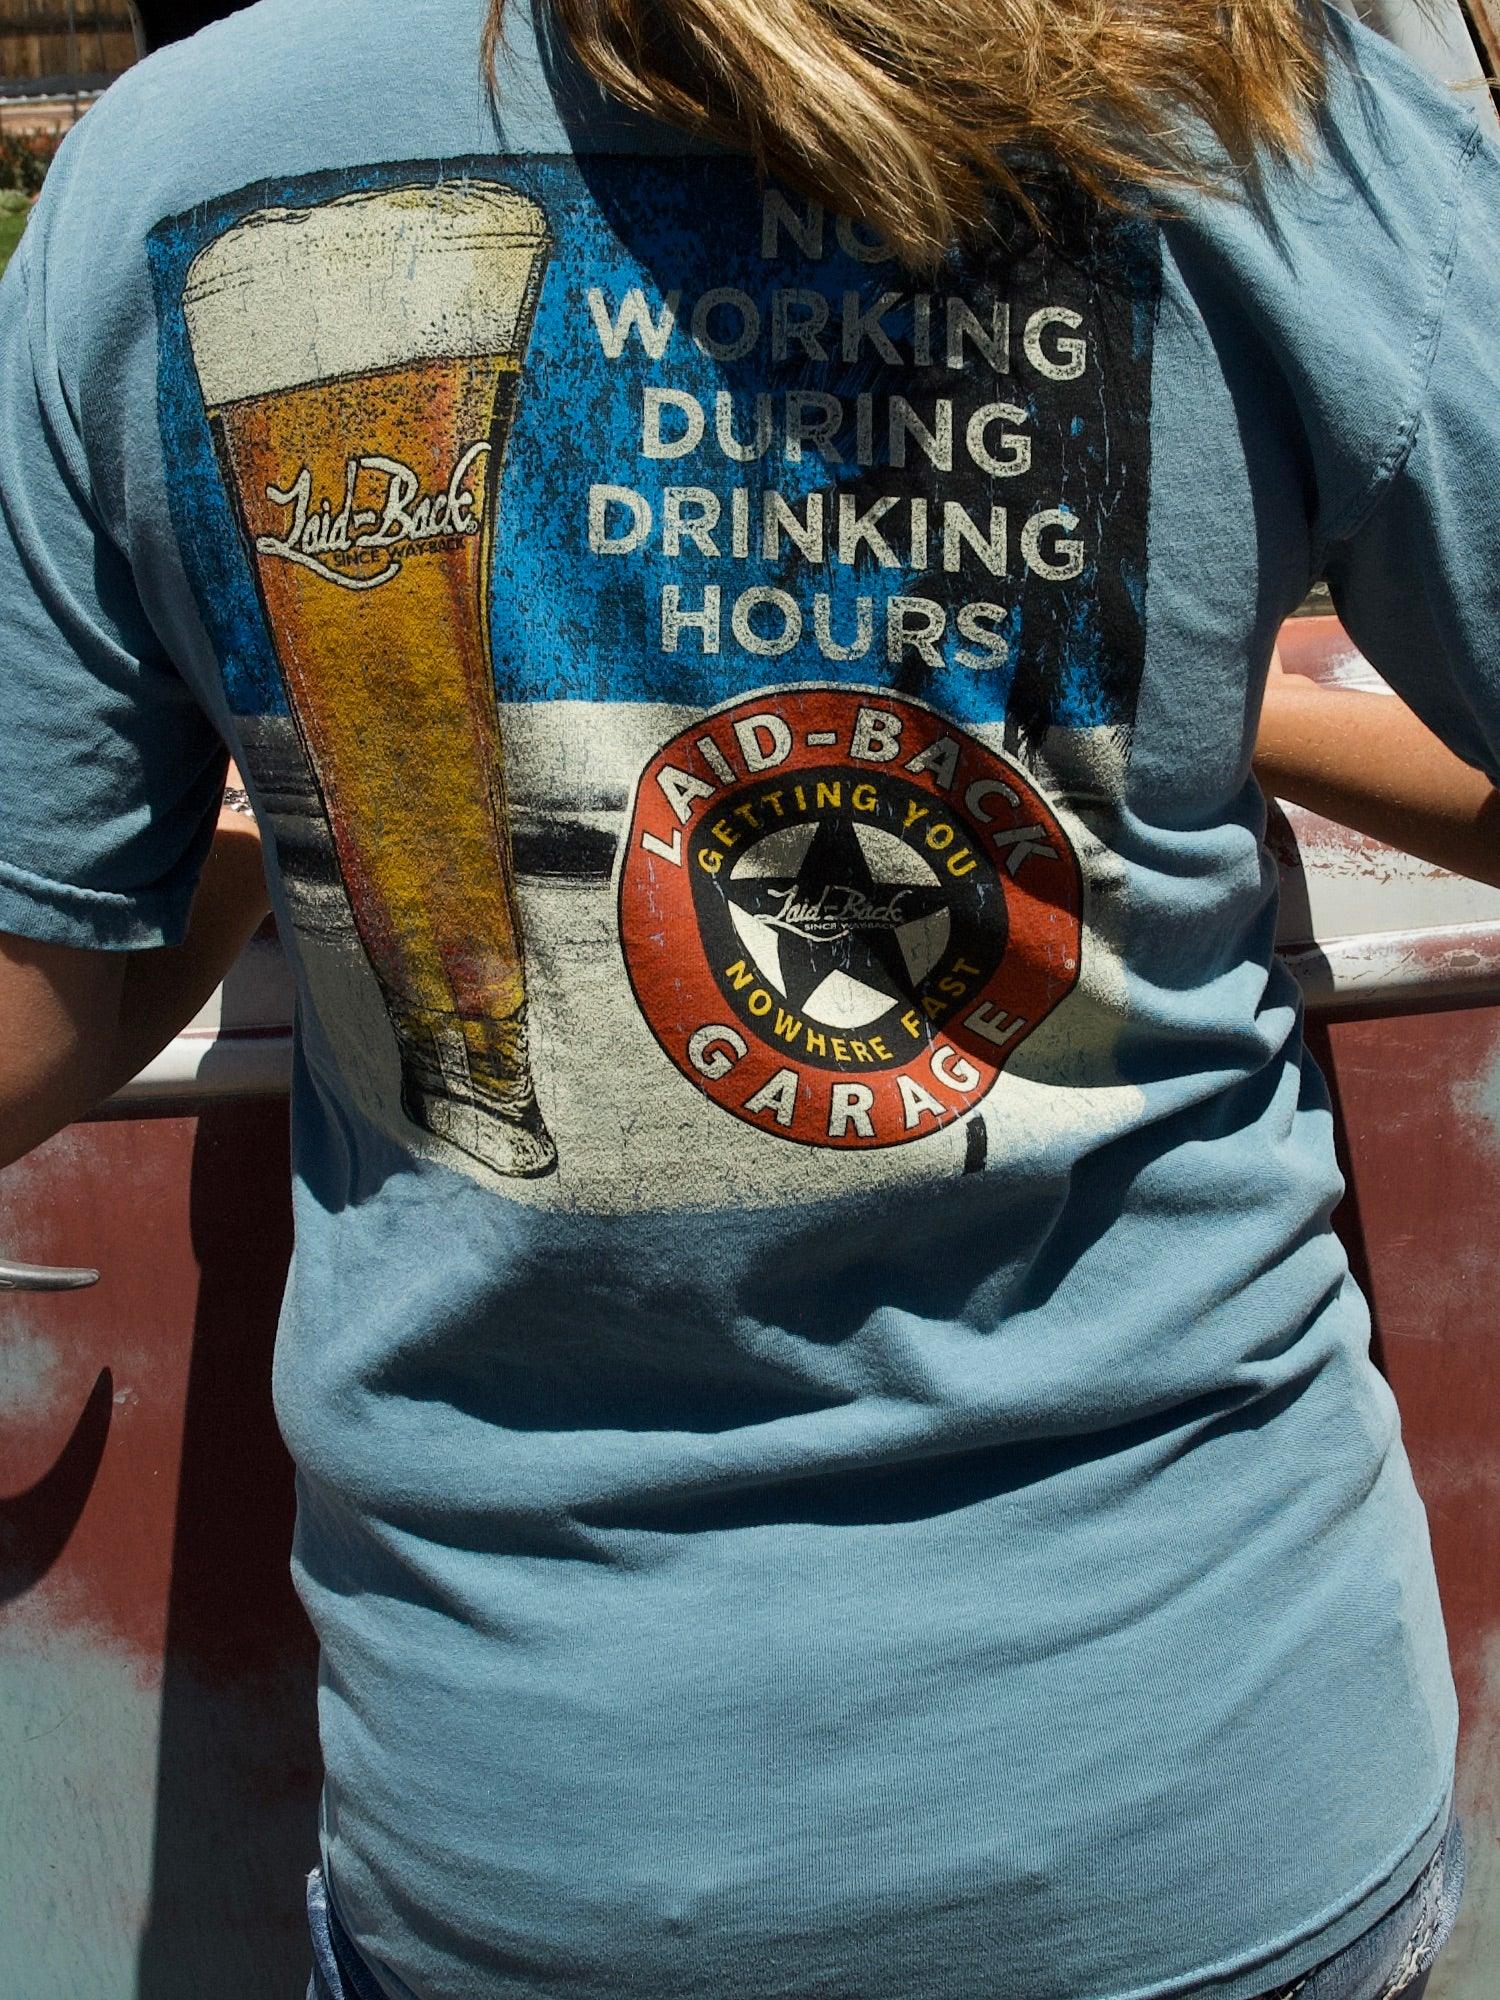 Motorway Beer T-Shirt